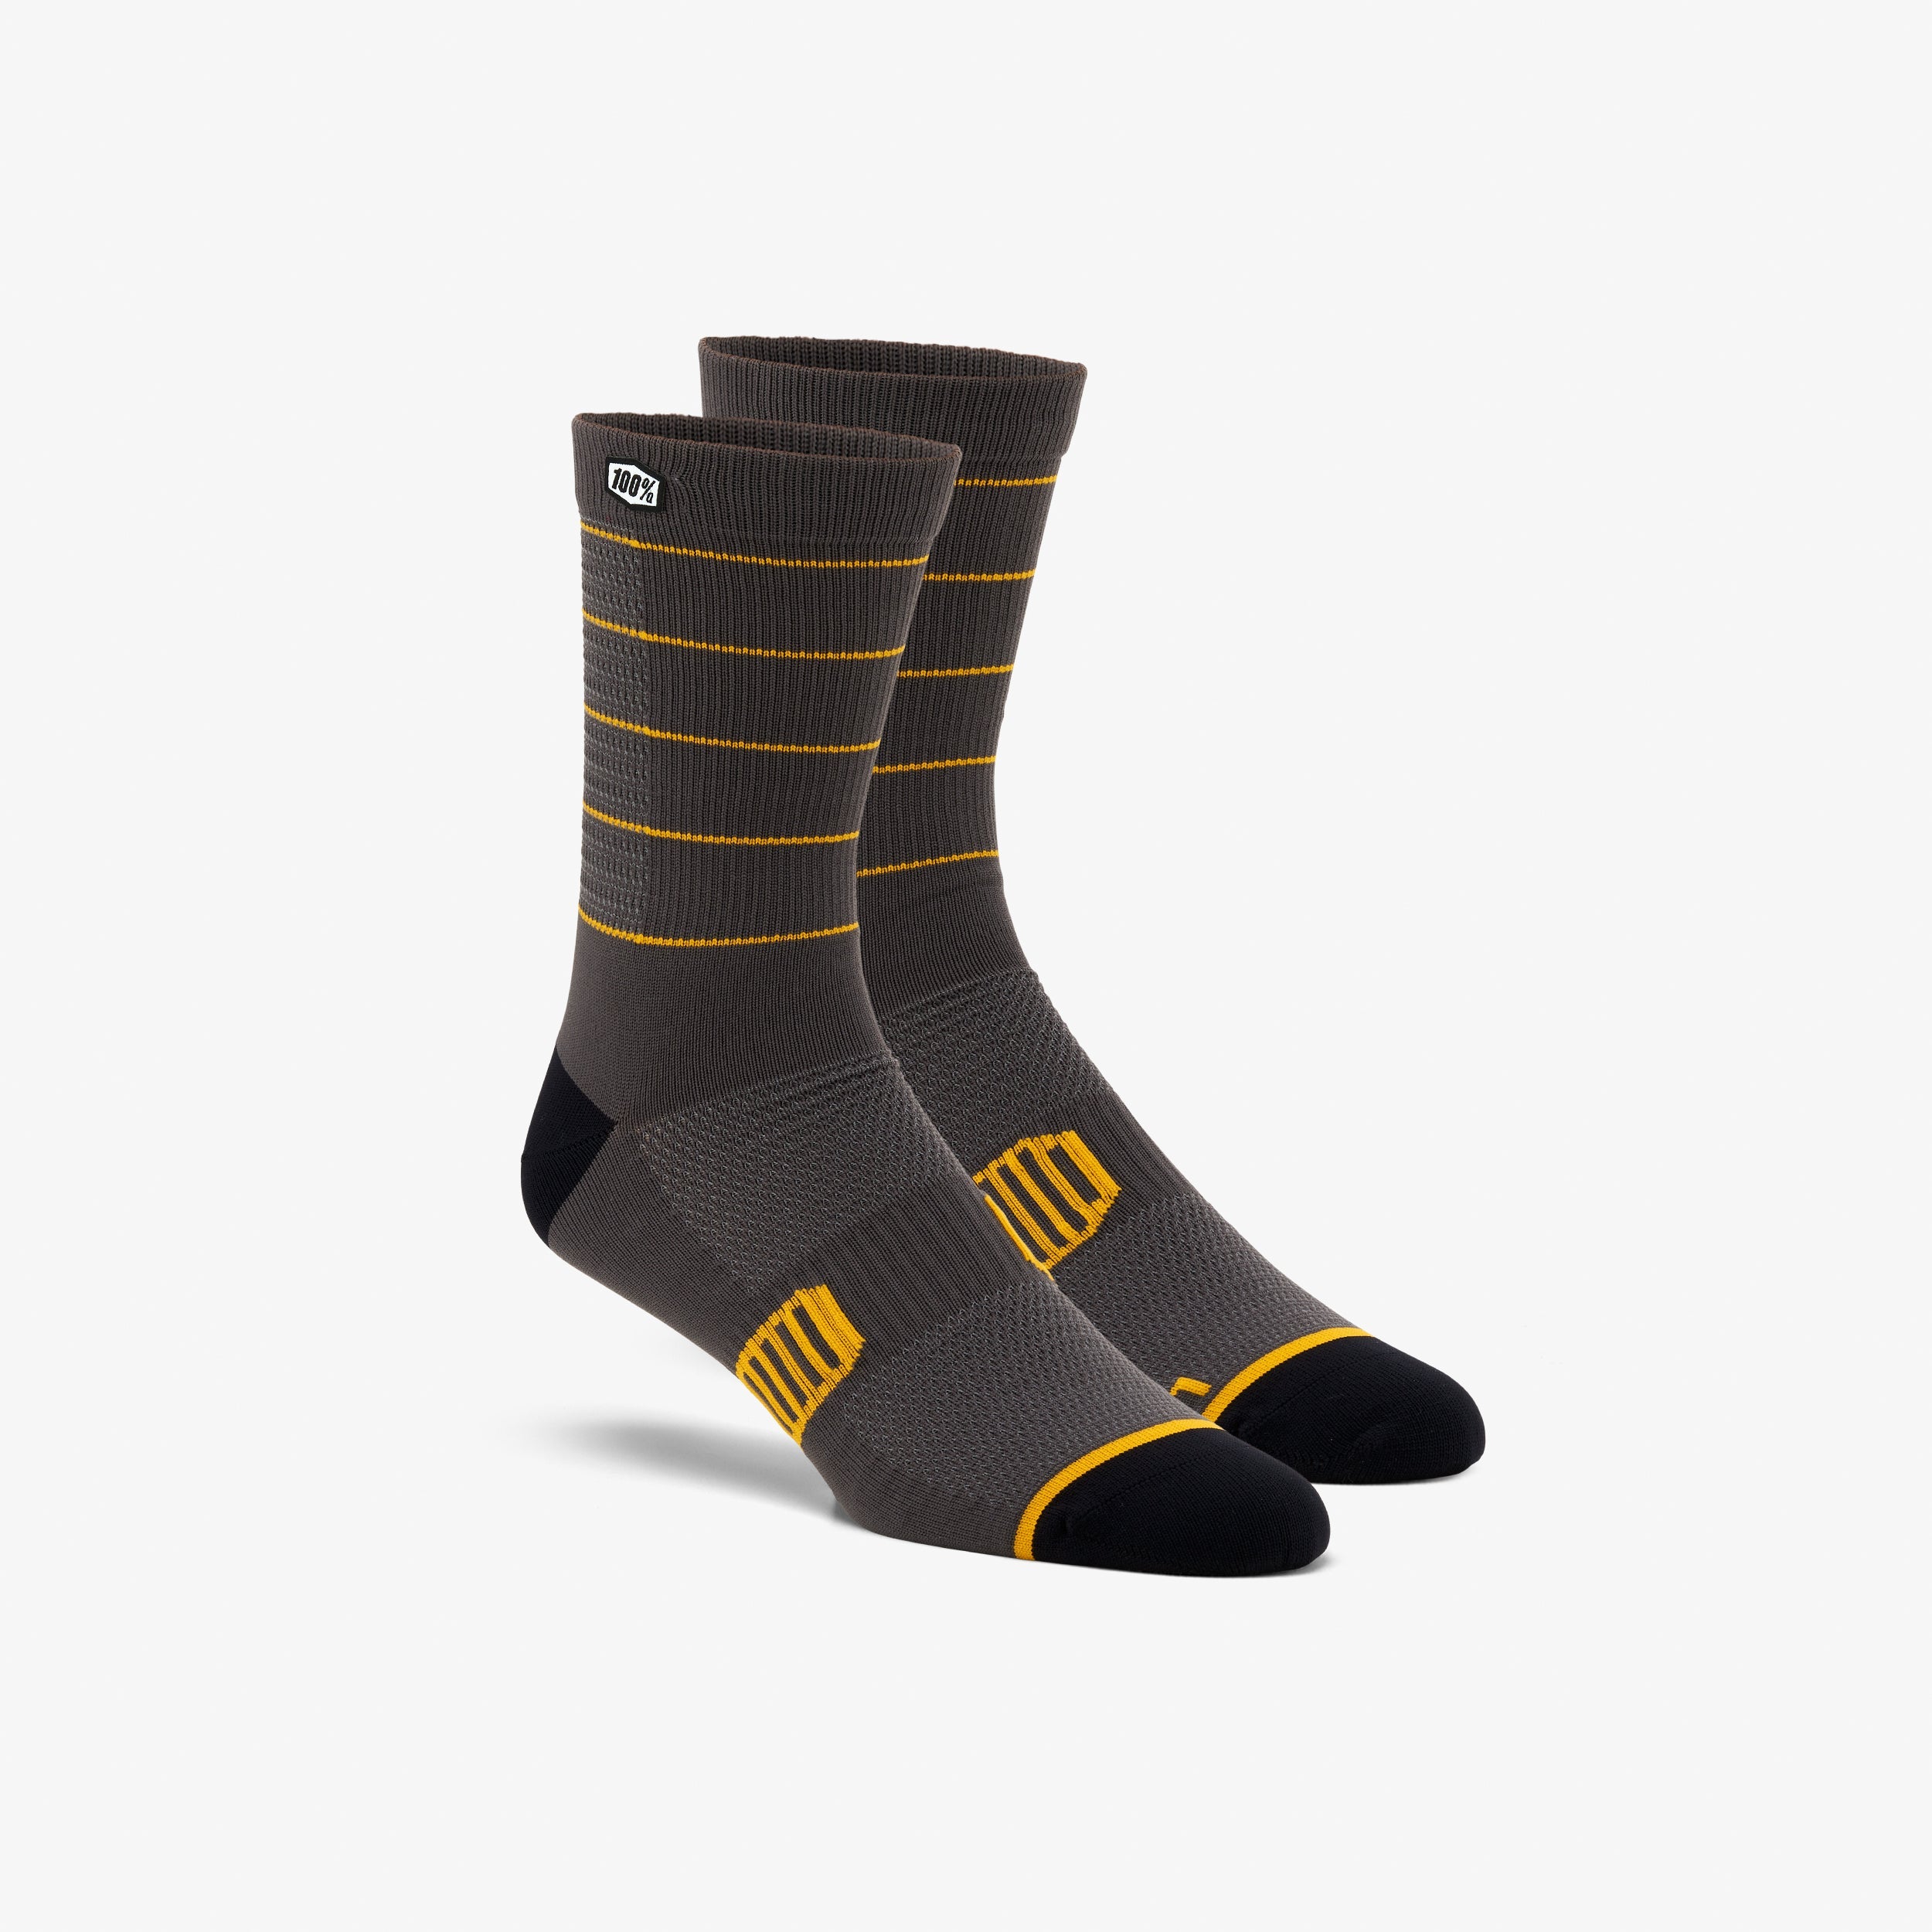 ADVOCATE Performance MTB Socks Charcoal/Mustard